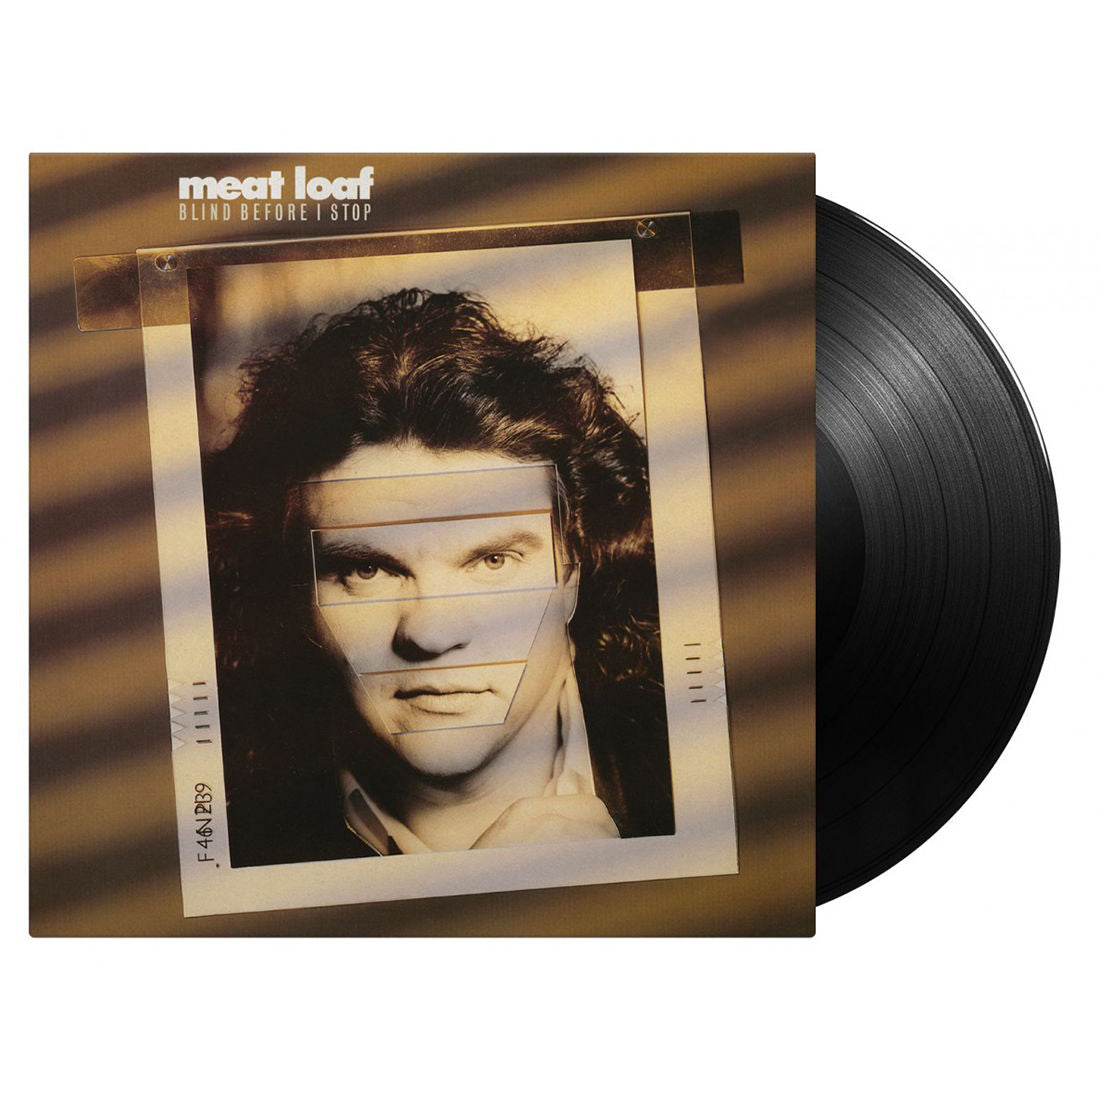 Blind Before I Stop: Vinyl LP